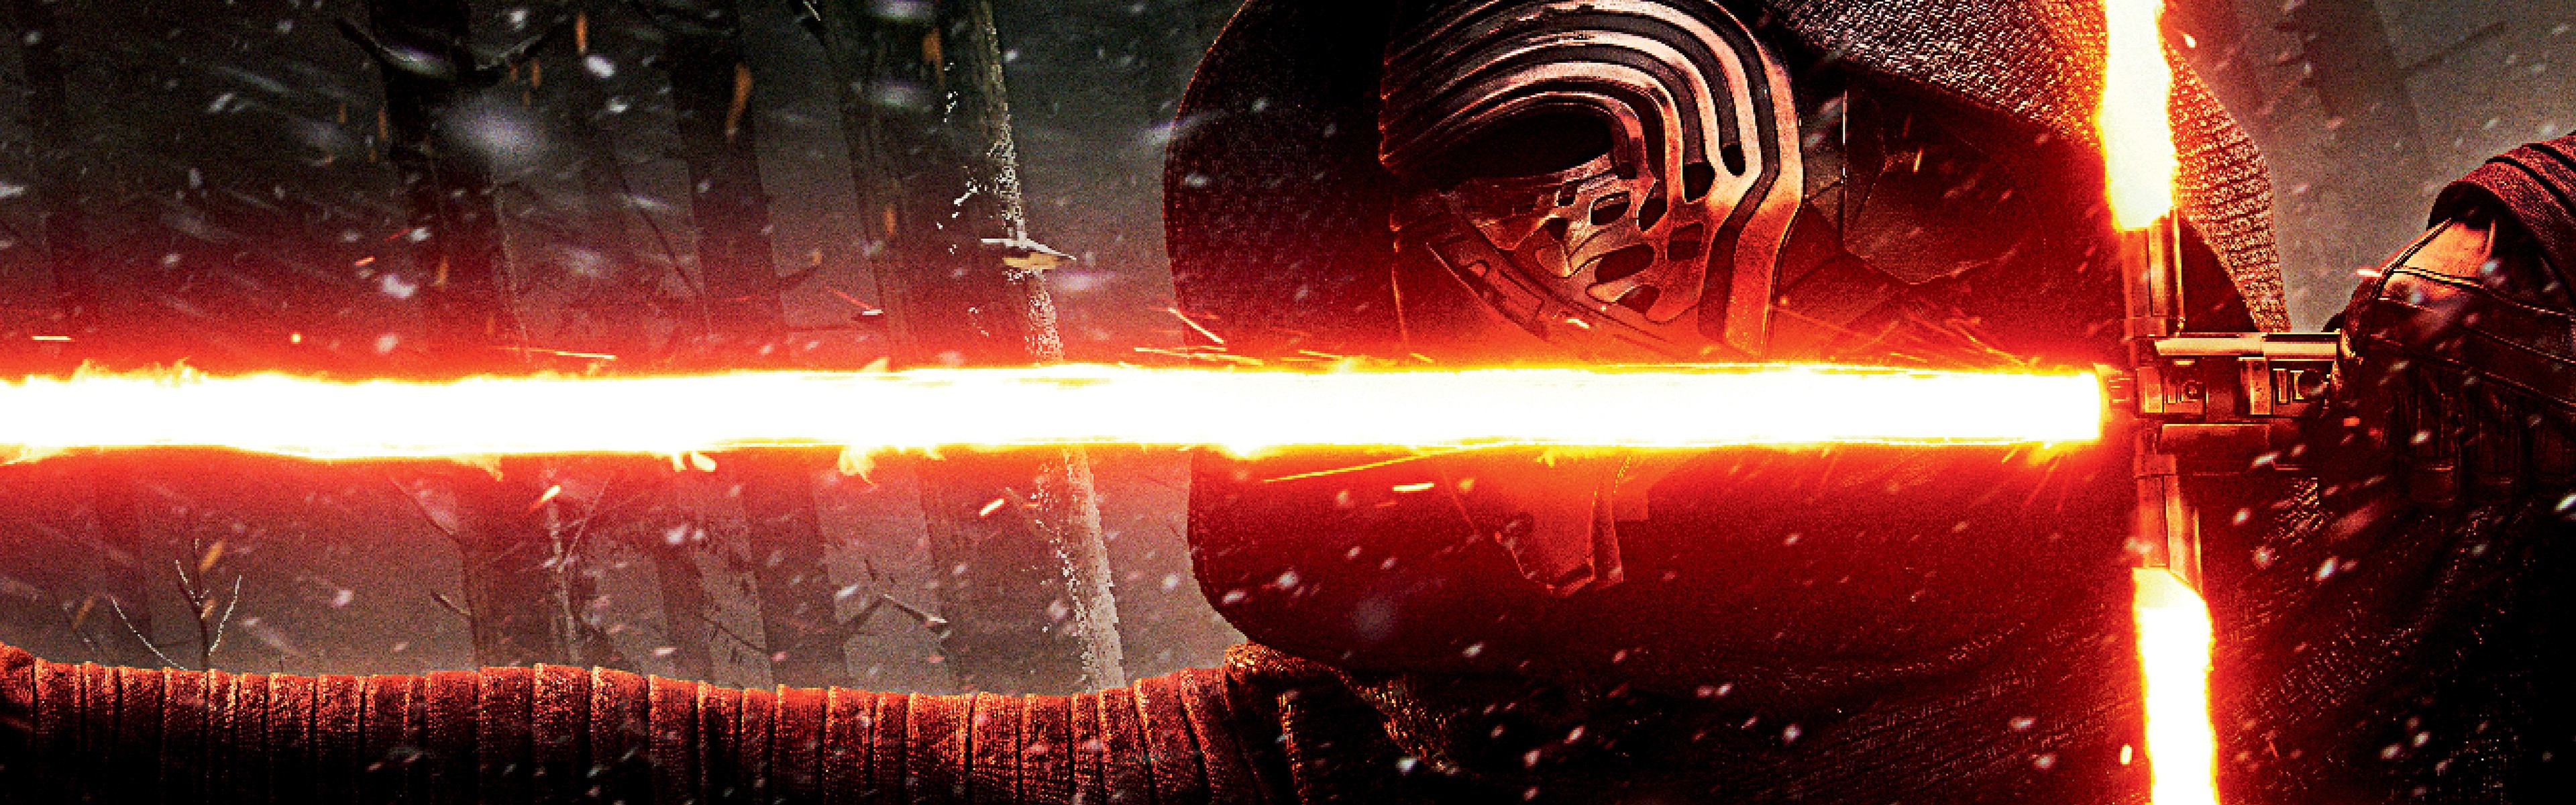 Kylo Ren, Lightsaber, Star Wars: The Force Awakens, Movies Wallpaper